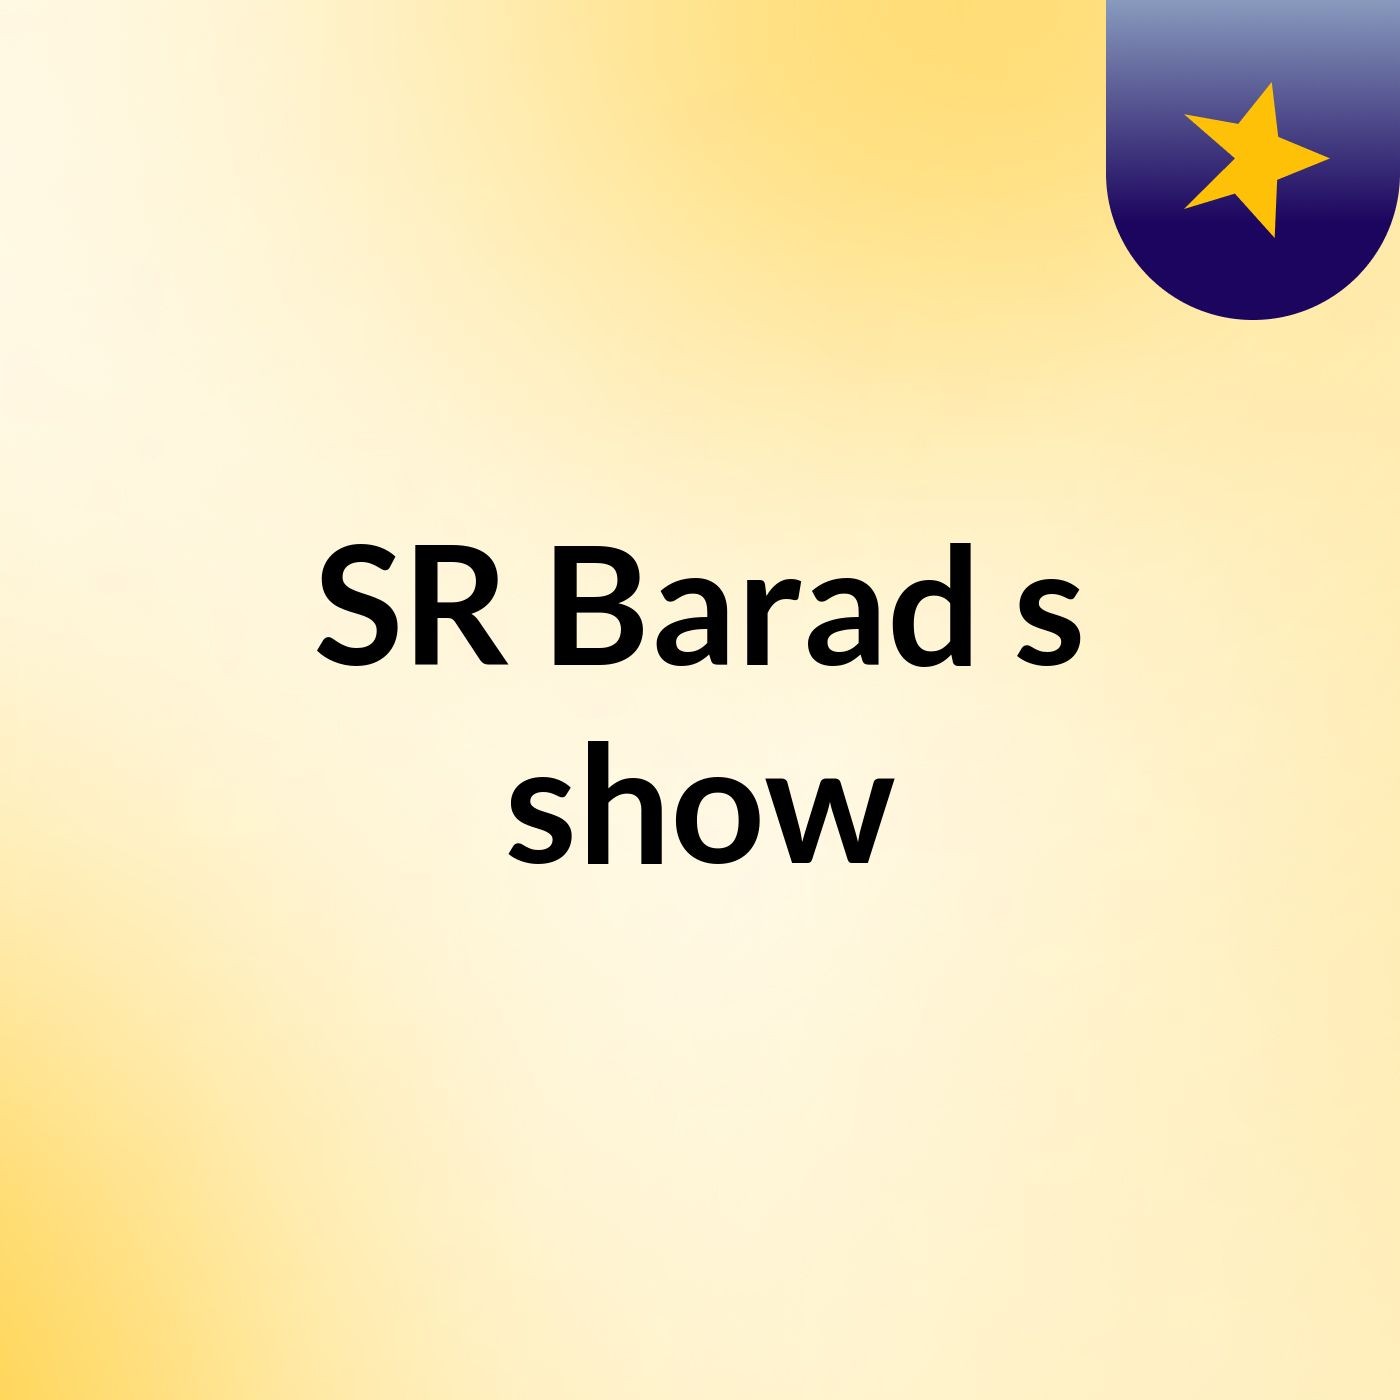 SR Barad's show